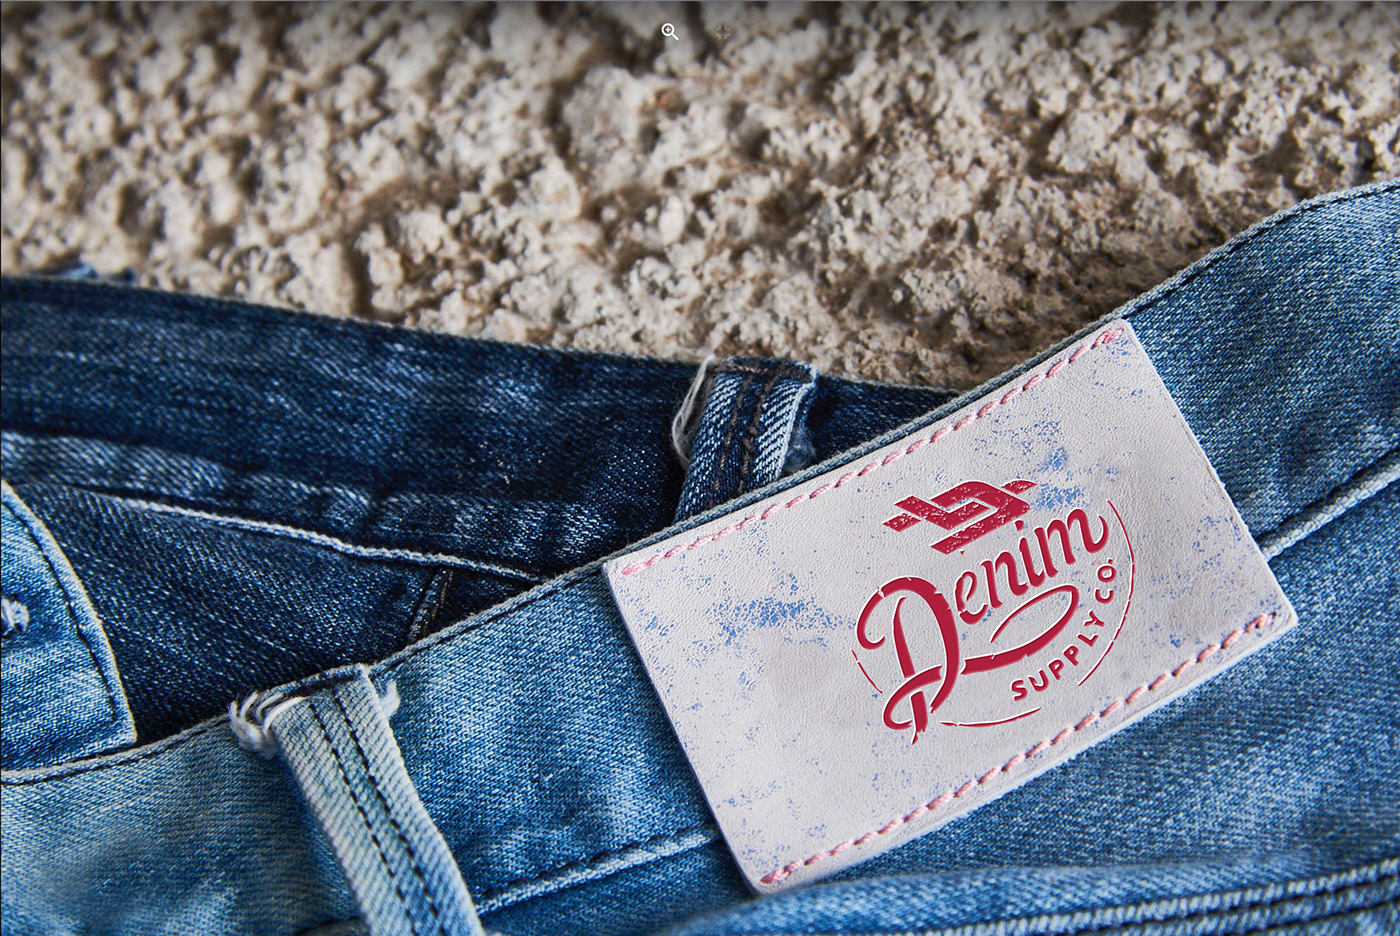 Indian Cafe Retail design beverages Food  jeans Packaging branding  labels hangtags Garments